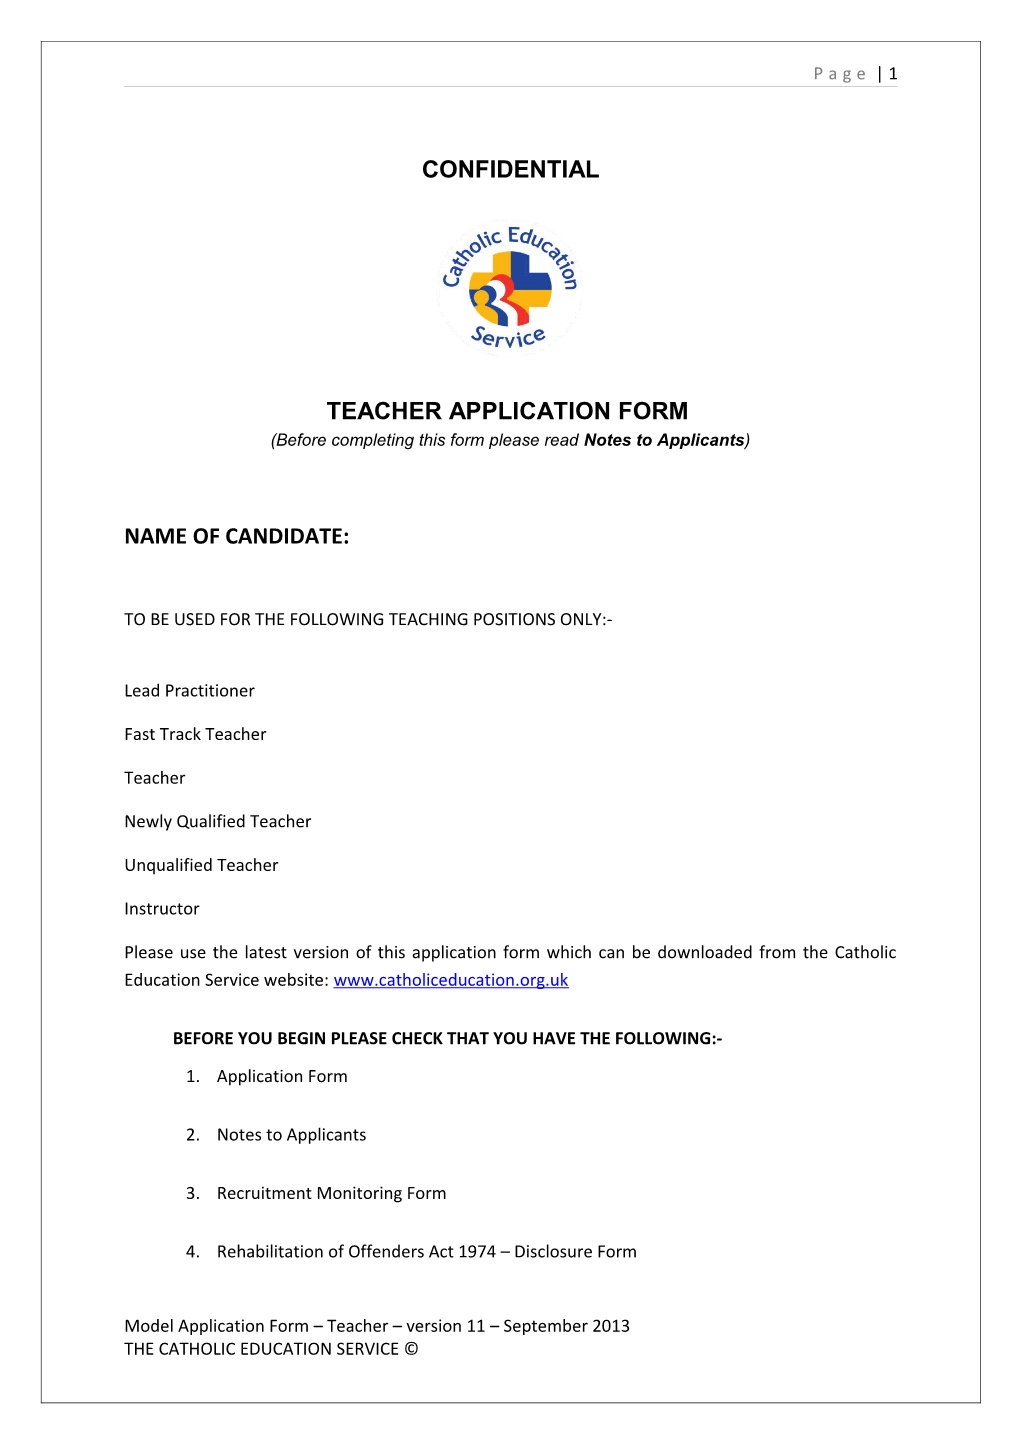 Teacher Application Form s5